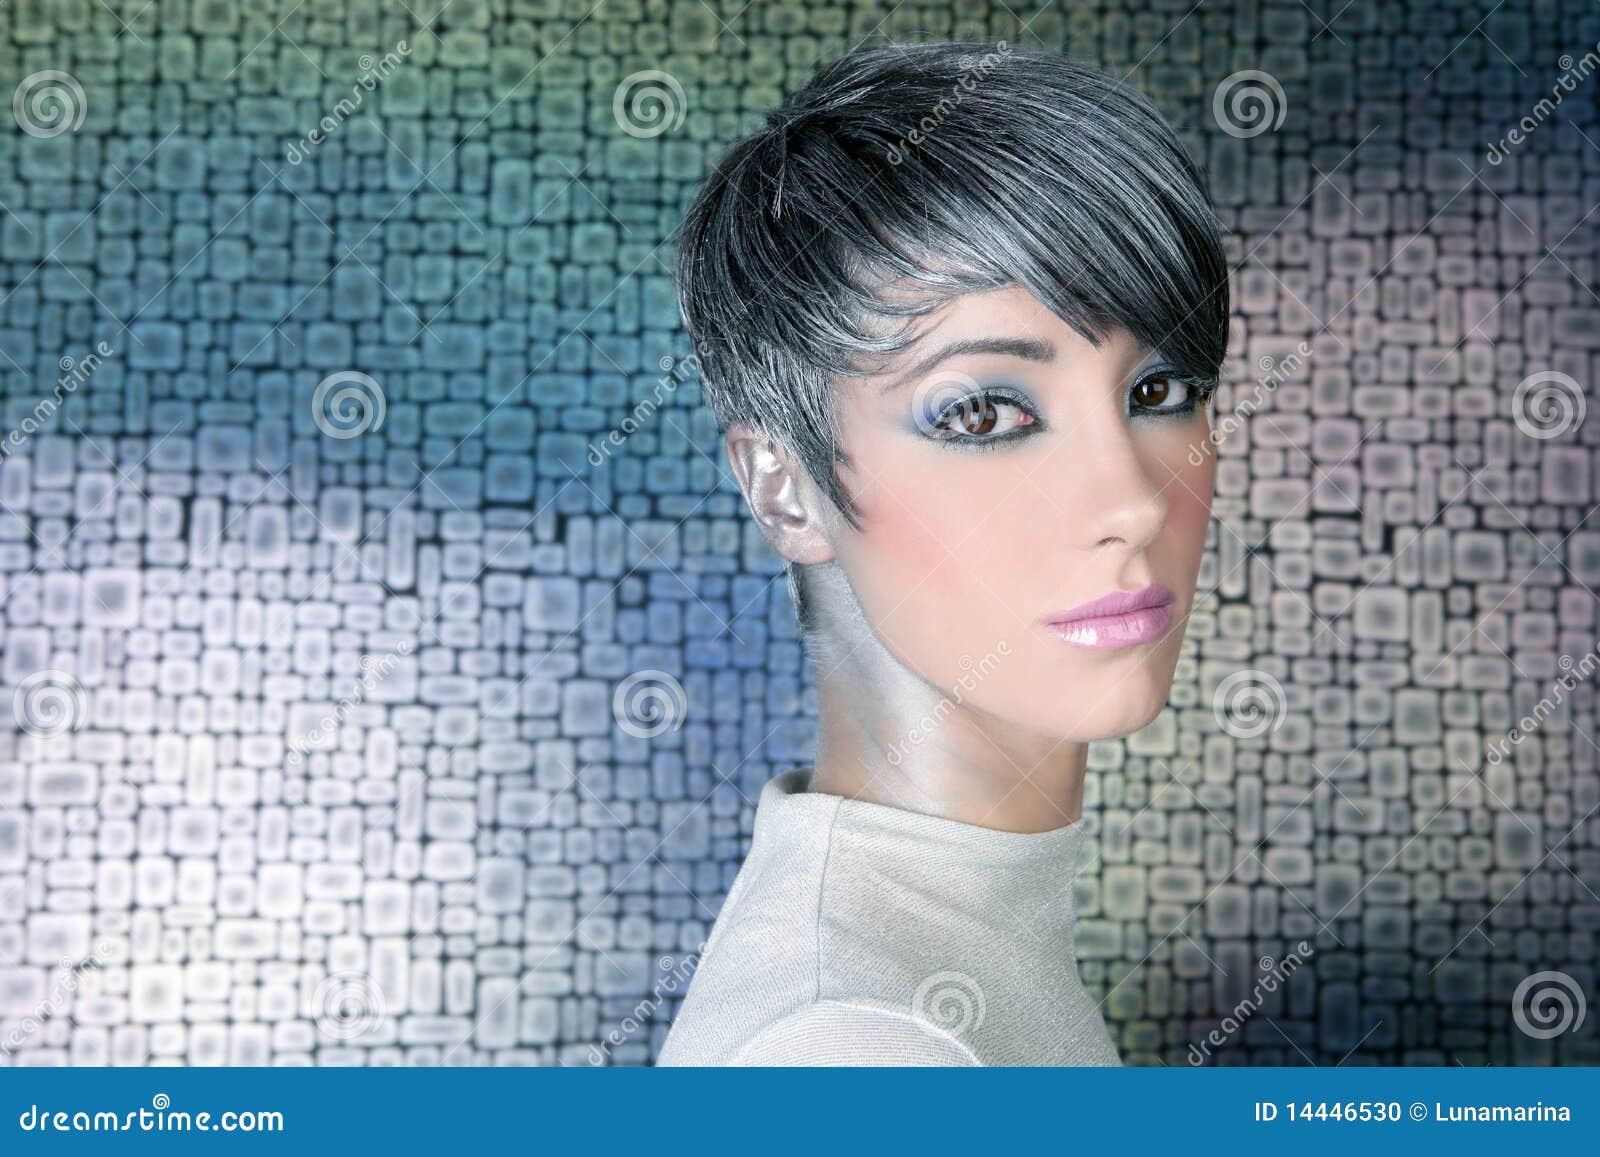 Silver Futuristic Hairstyle Makeup Portrait Stock Photo 